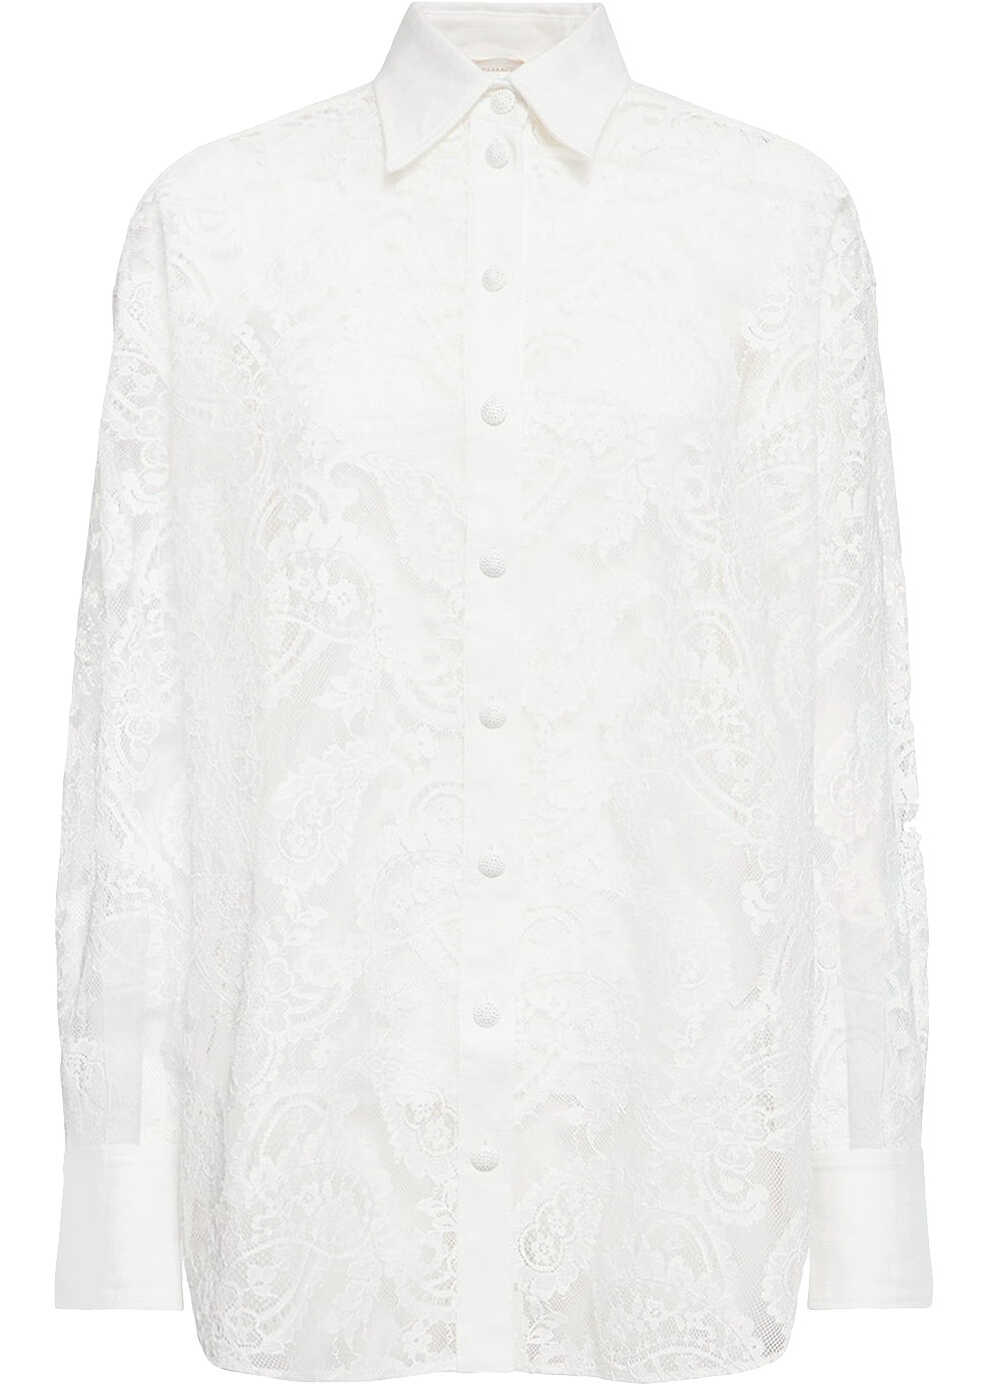 ZIMMERMANN Shirt White